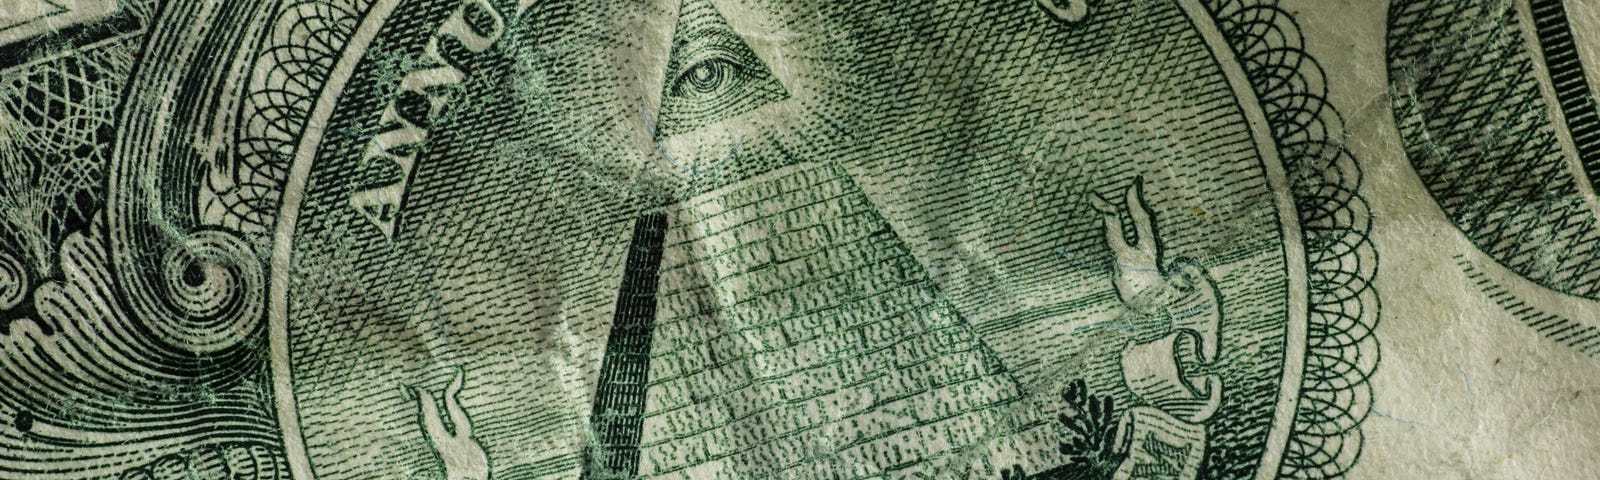 illuminati logo supposed on american money